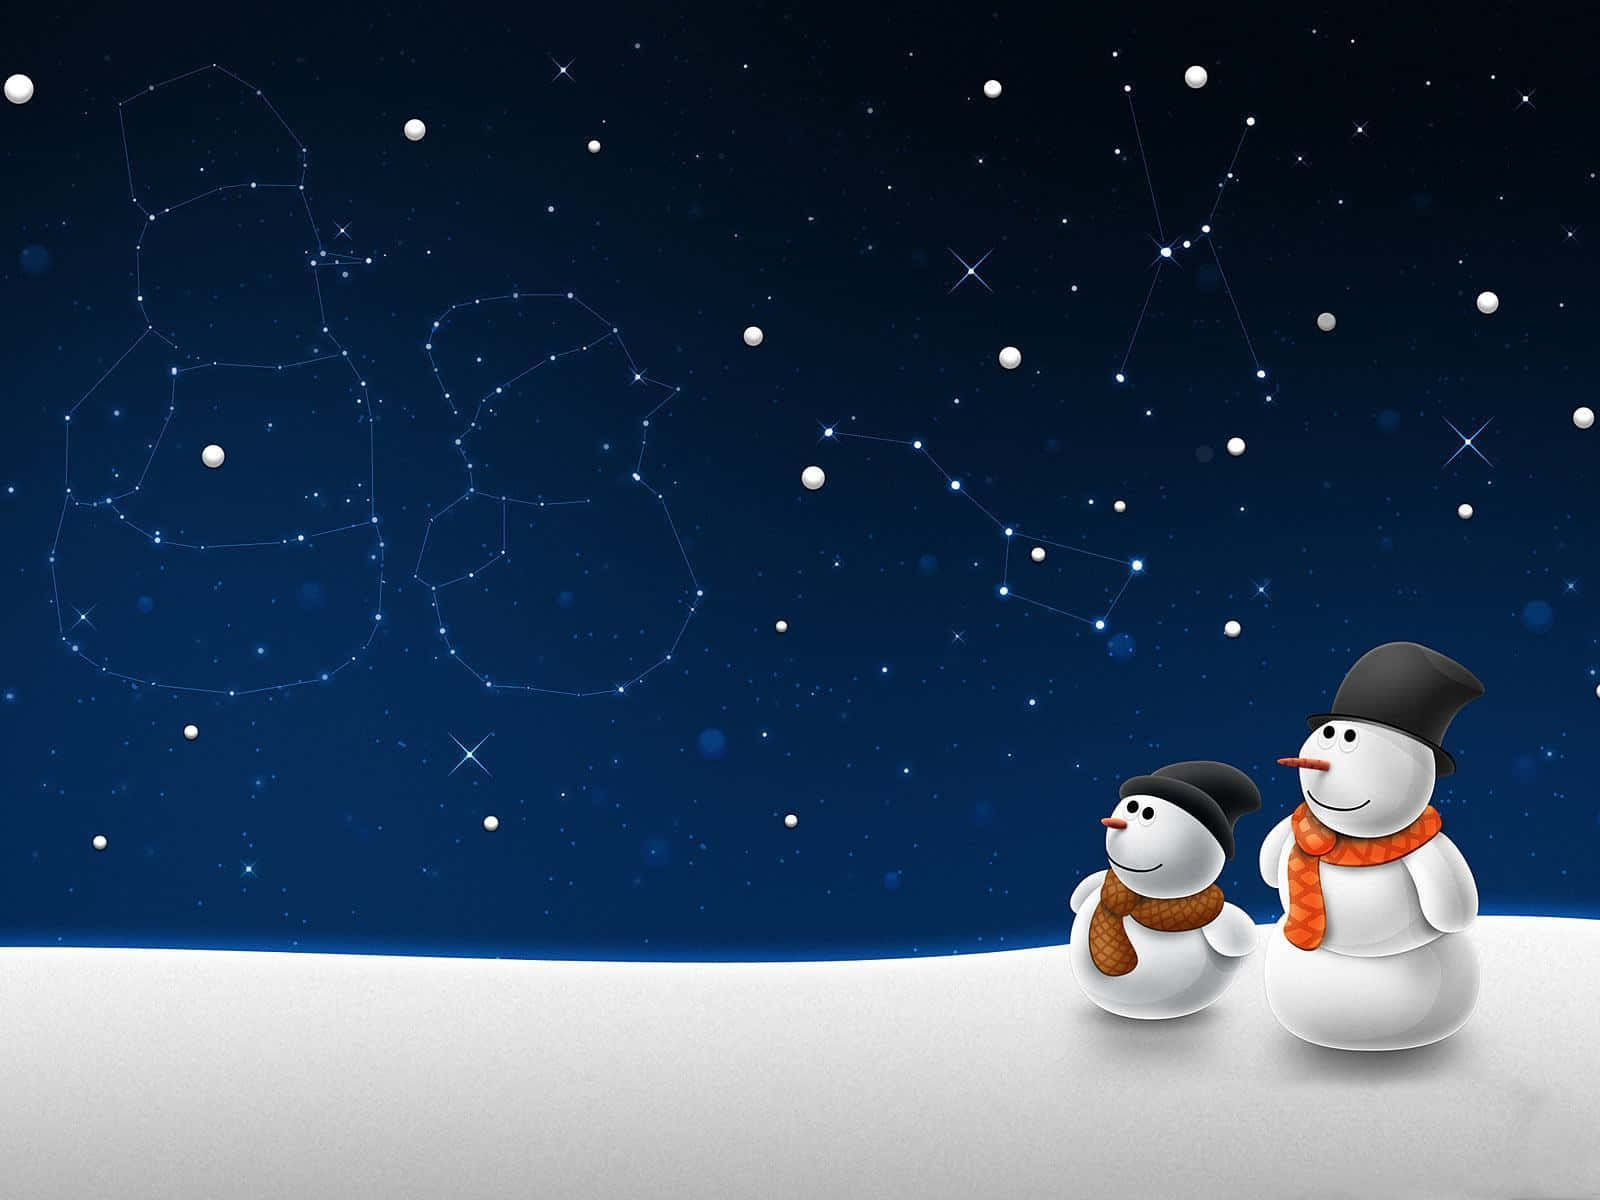 Winter Holiday Desktop Artwork Of Two Snowman Wallpaper